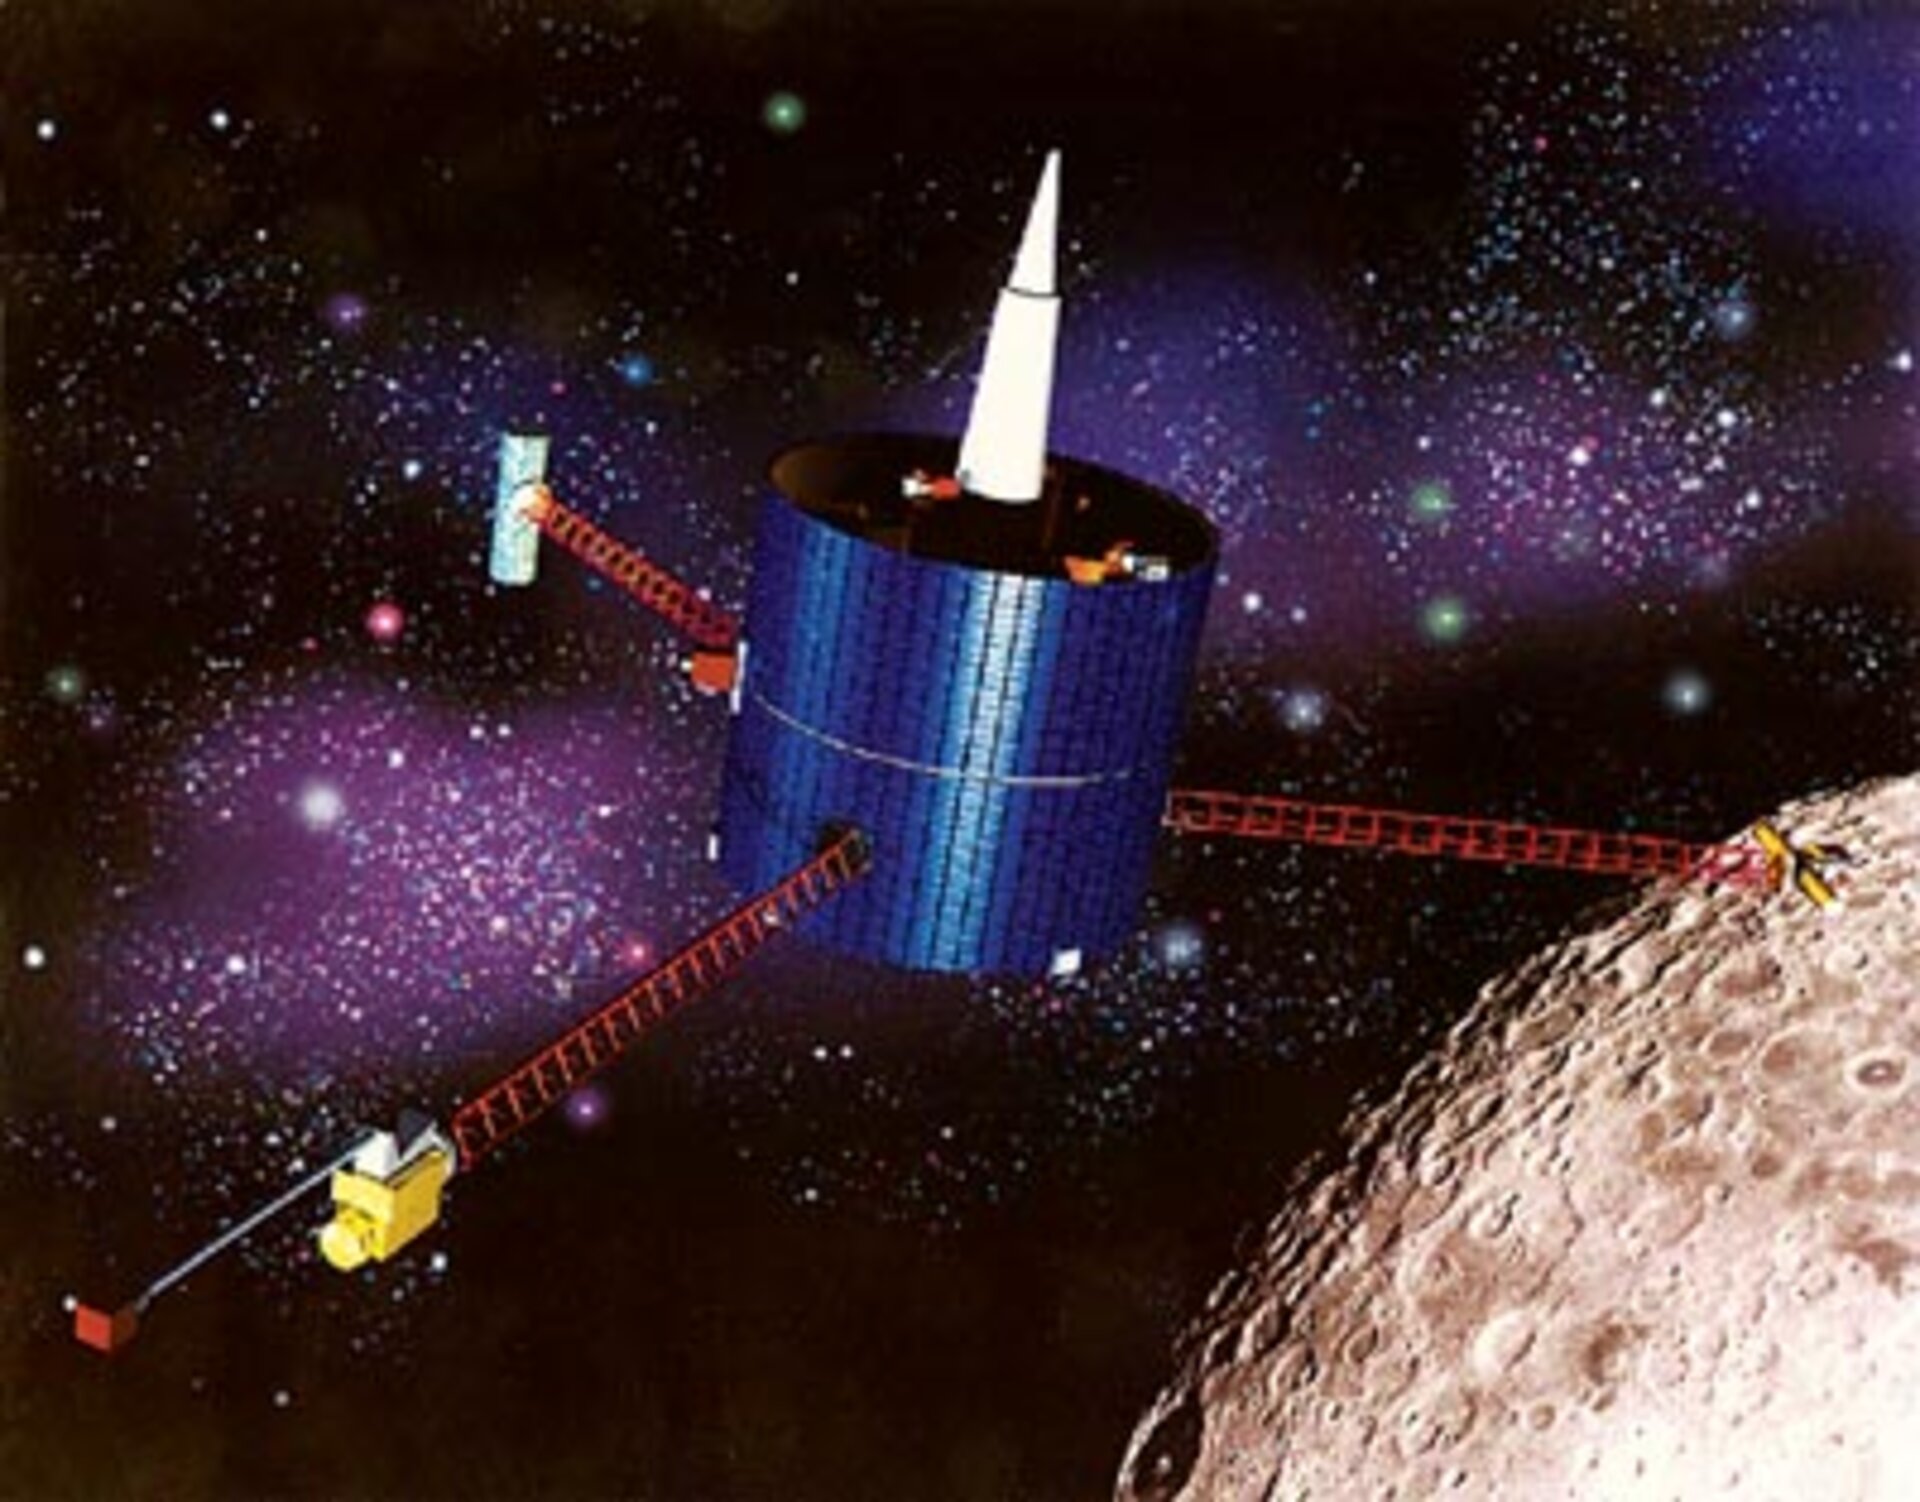 The American Moon probe 'Lunar Prospector'